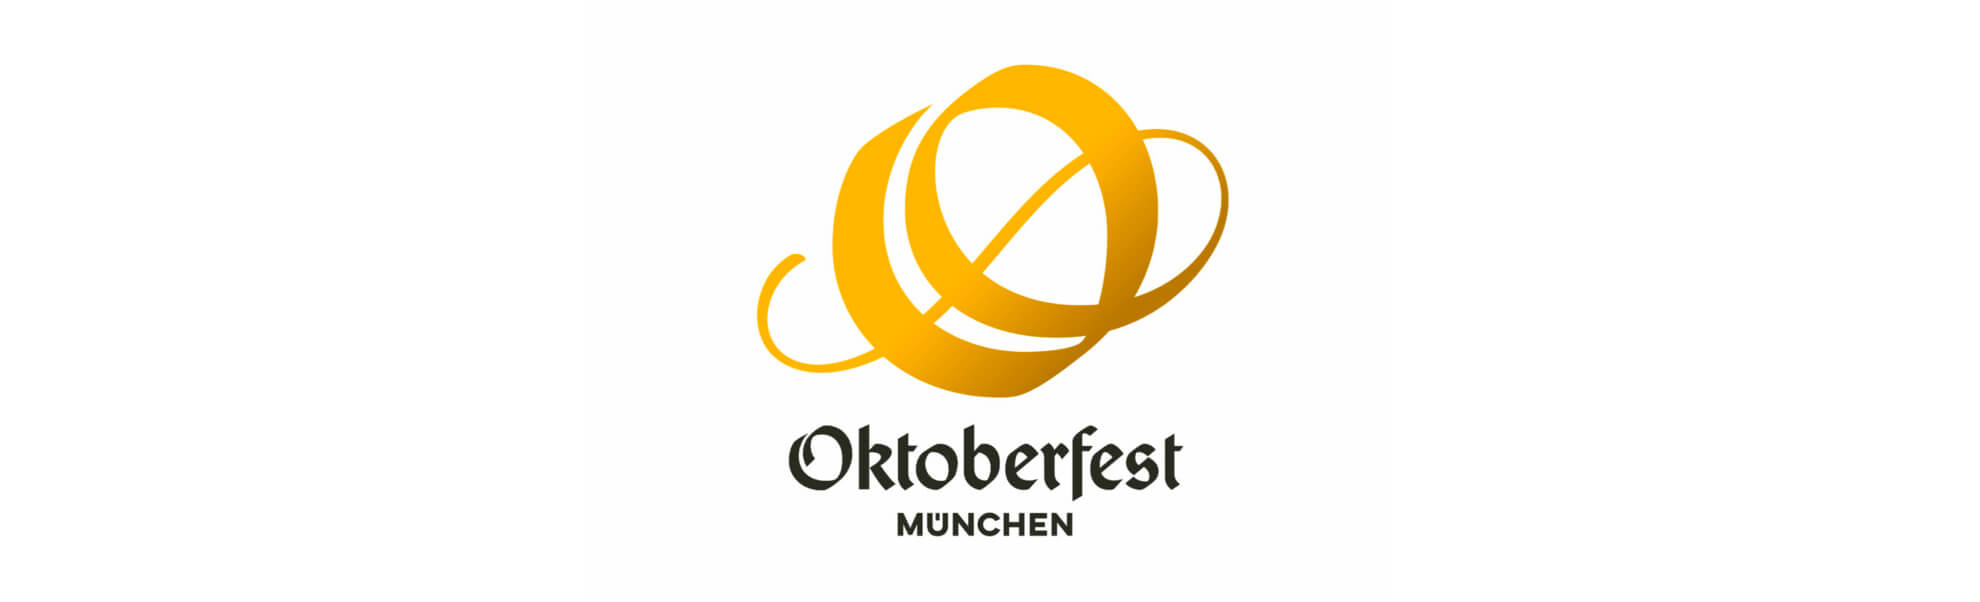 Nowe logo Oktoberfest